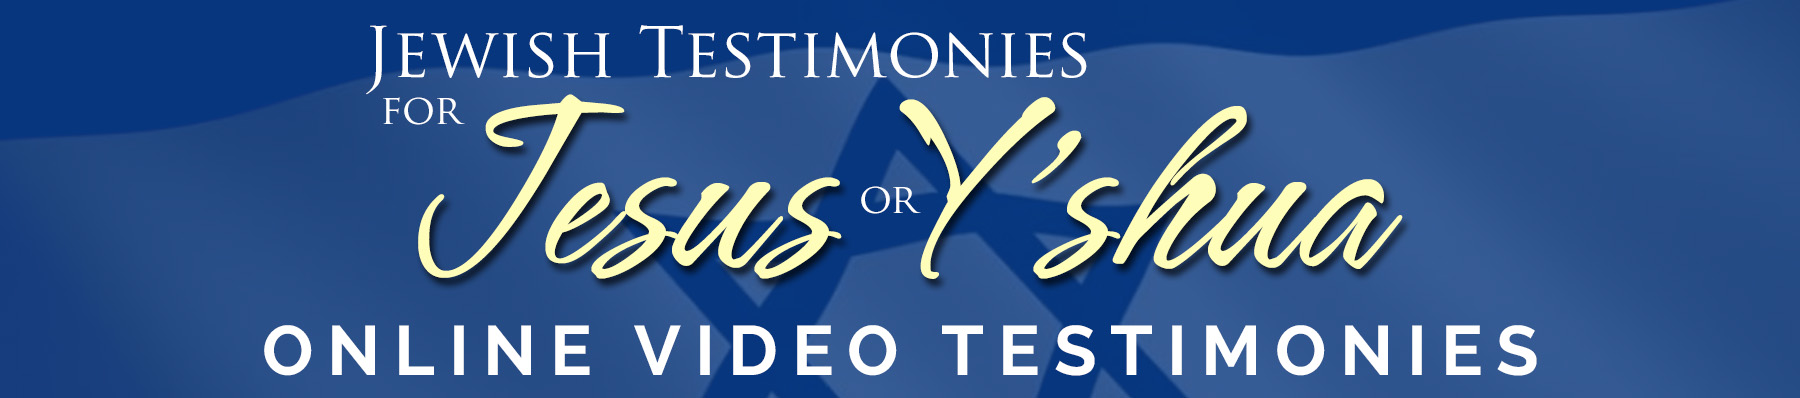 JewishTestimonies.com jewish testimonies